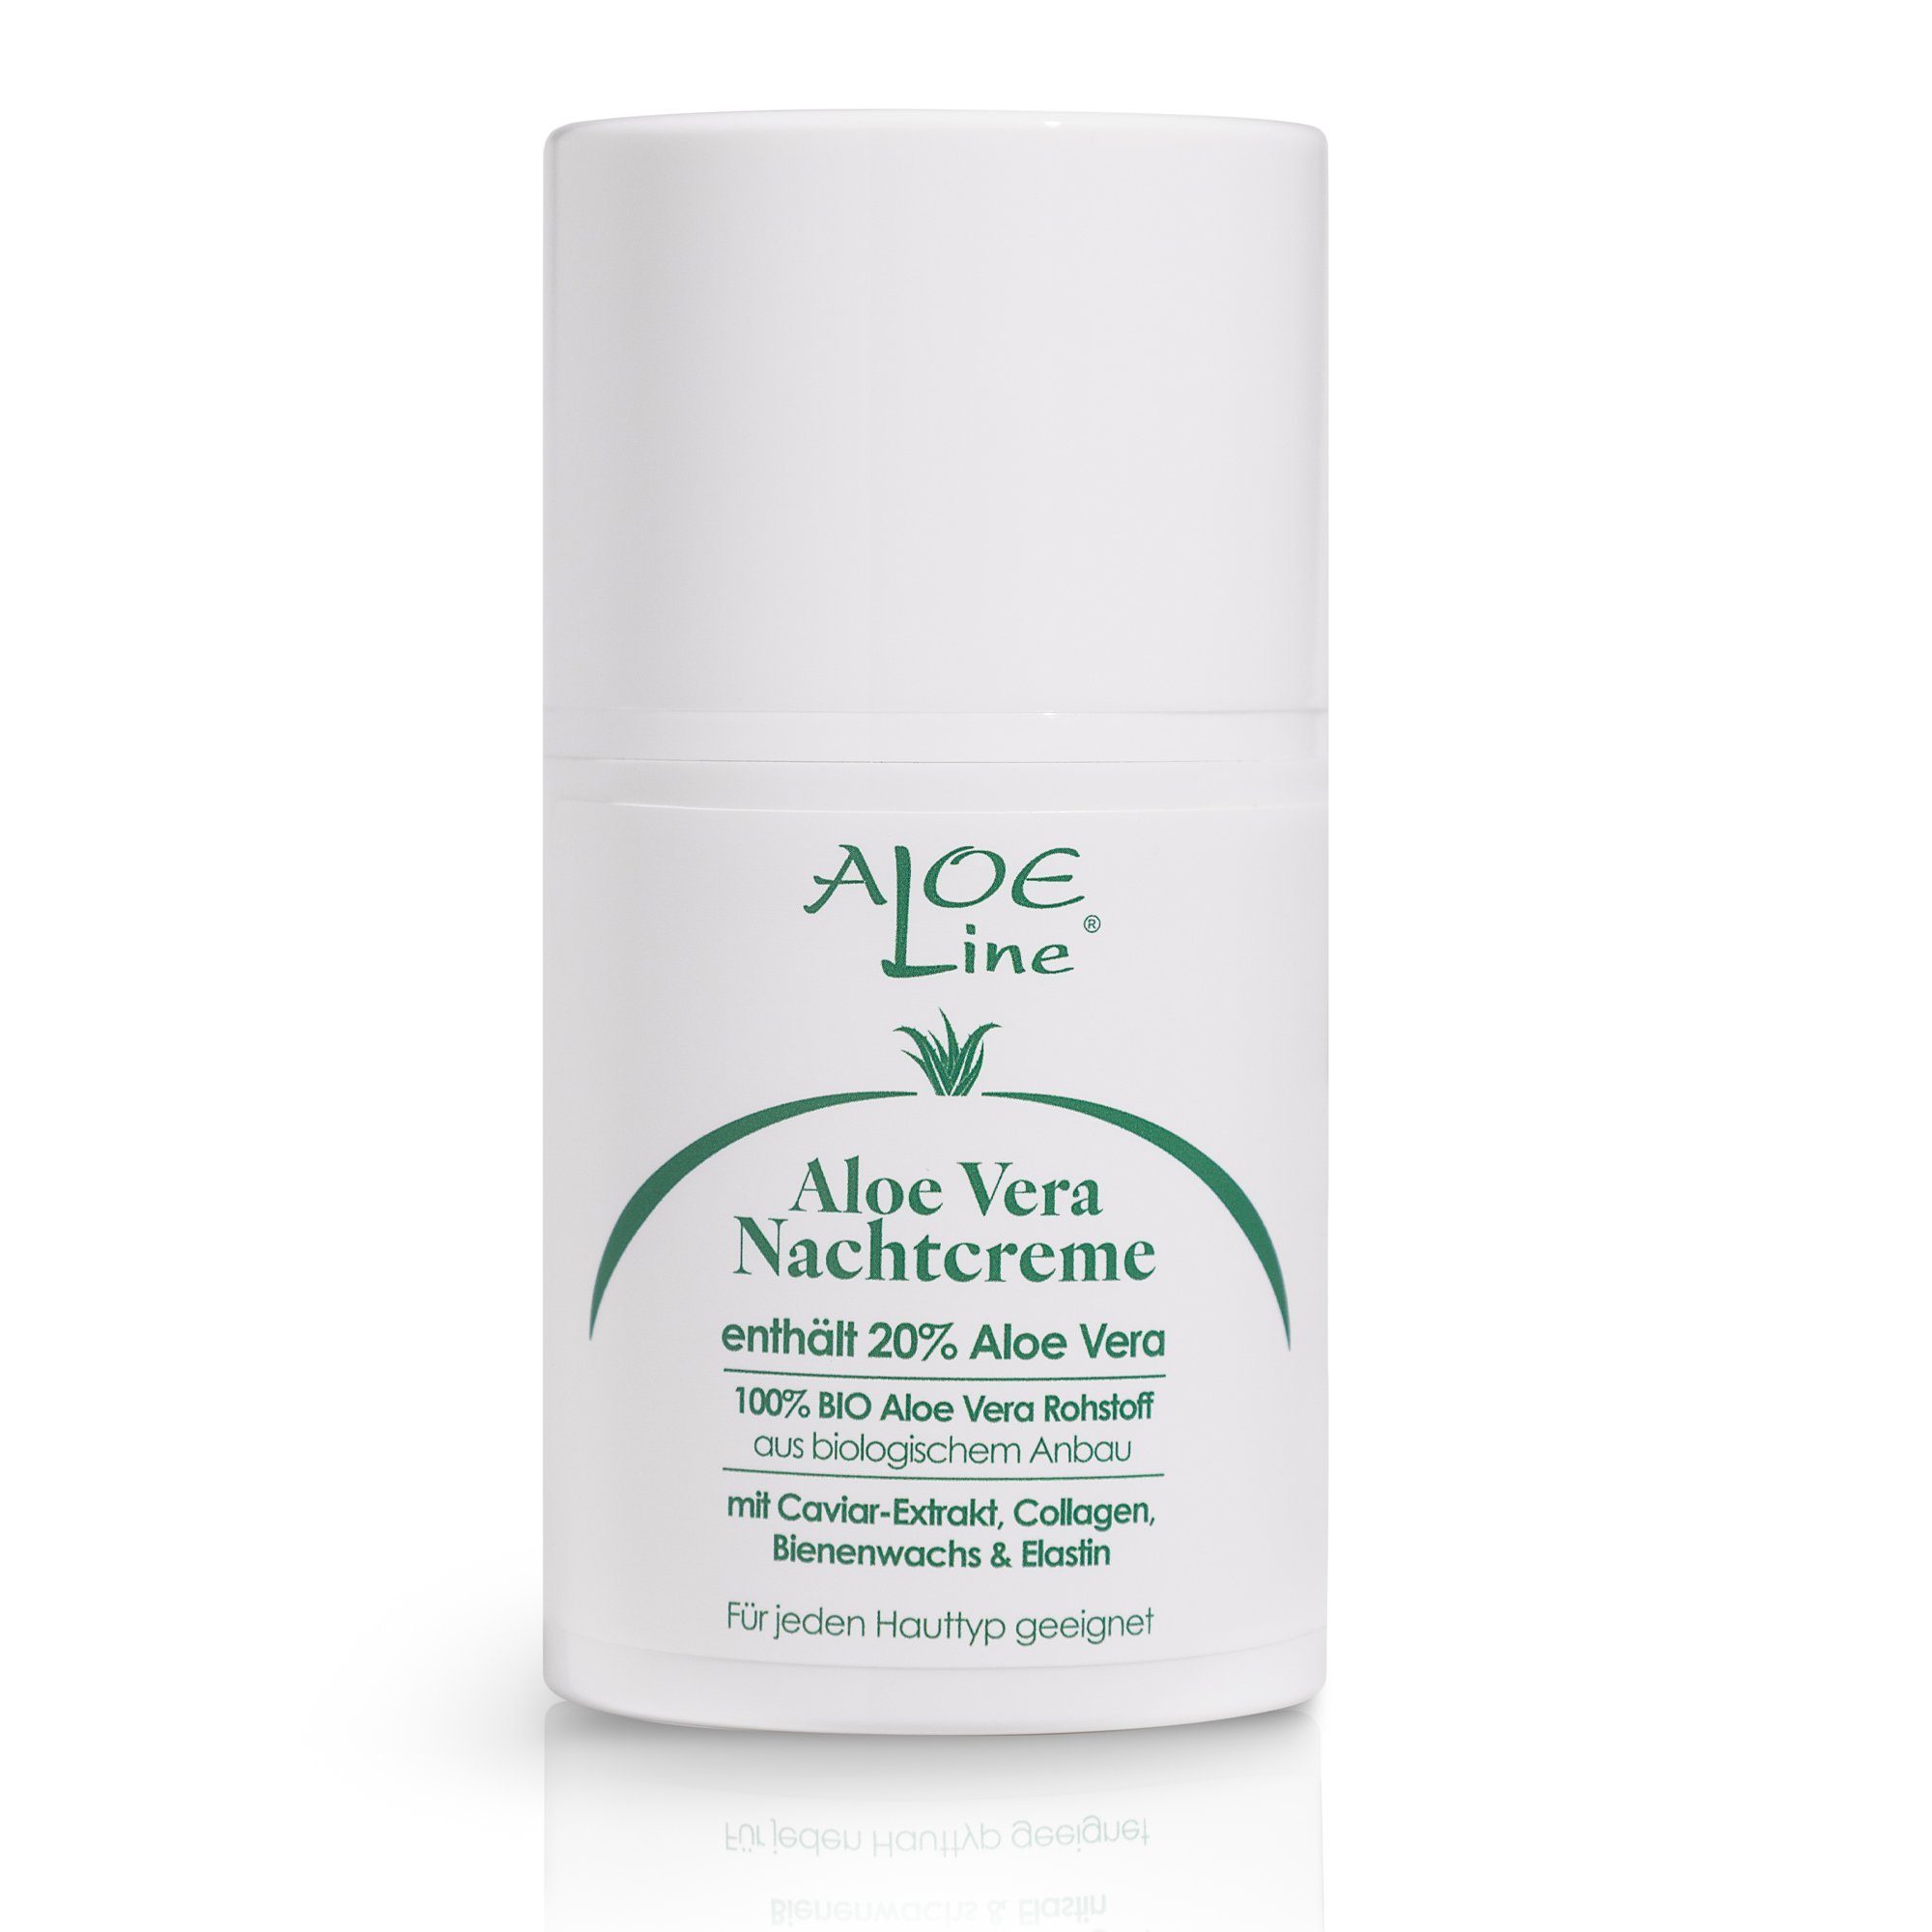 50ml & Line Bio ALOE Aloe Airless Dispenser mit Nachtcreme Vera Nachtcreme Caviar-Extrakt, 20% Aloe Vera